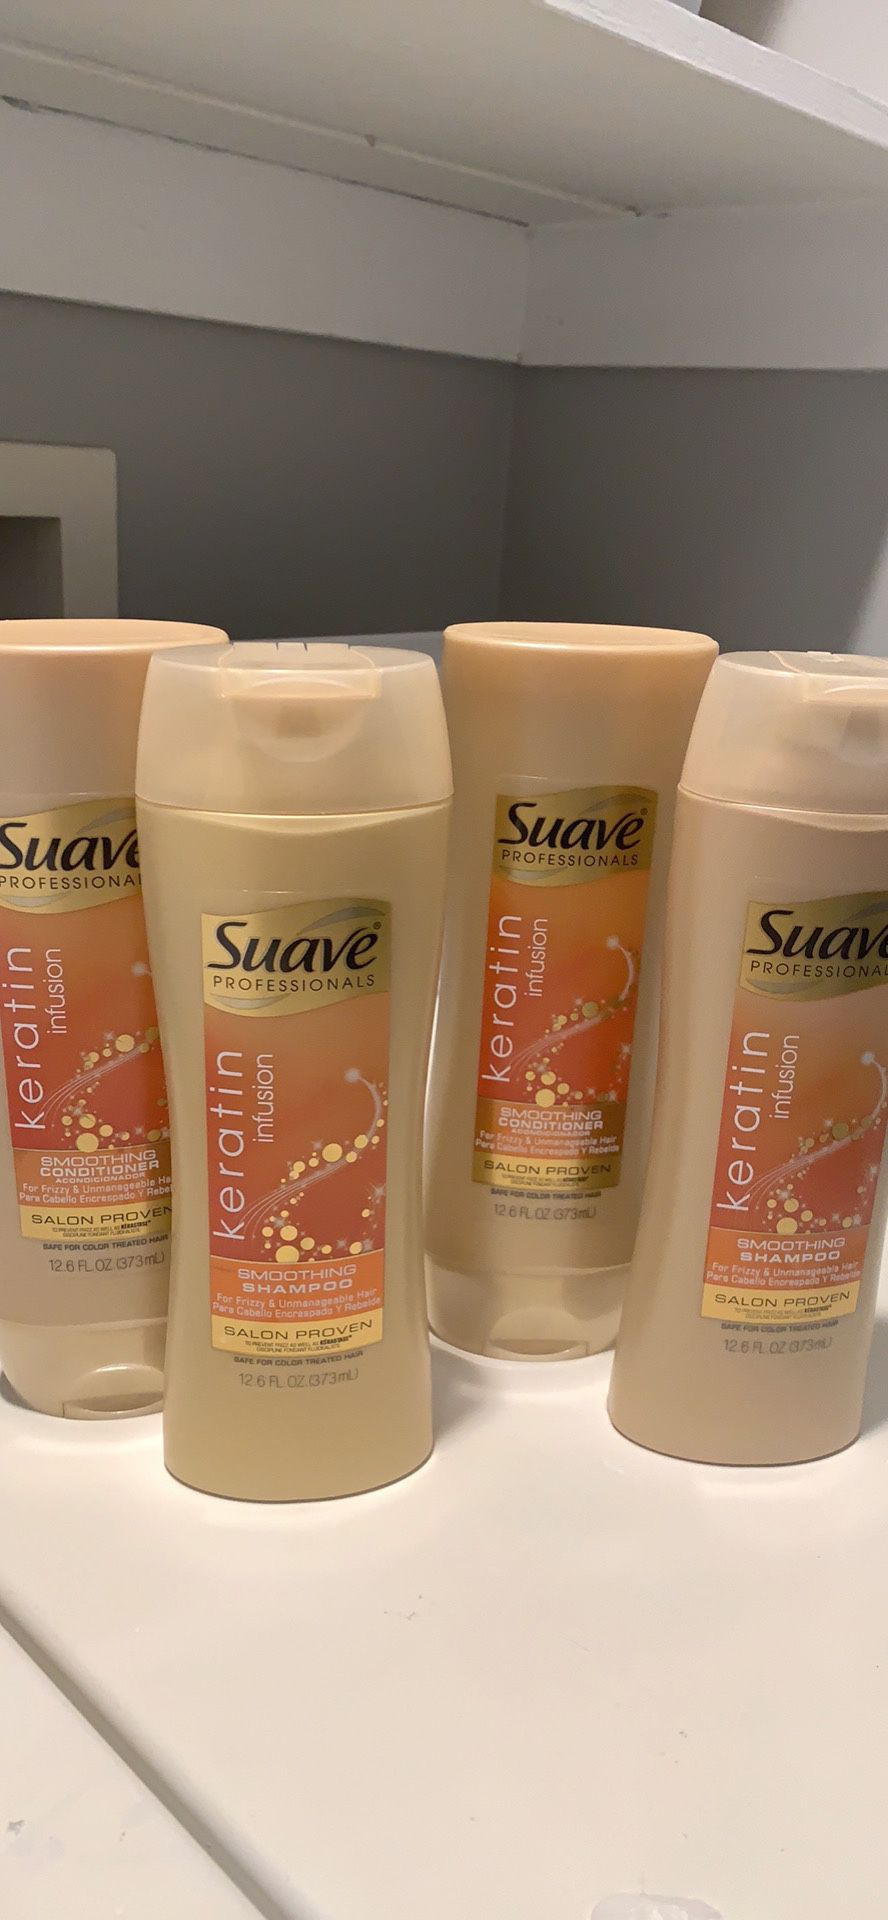 Suave professional shampoo and conditioner